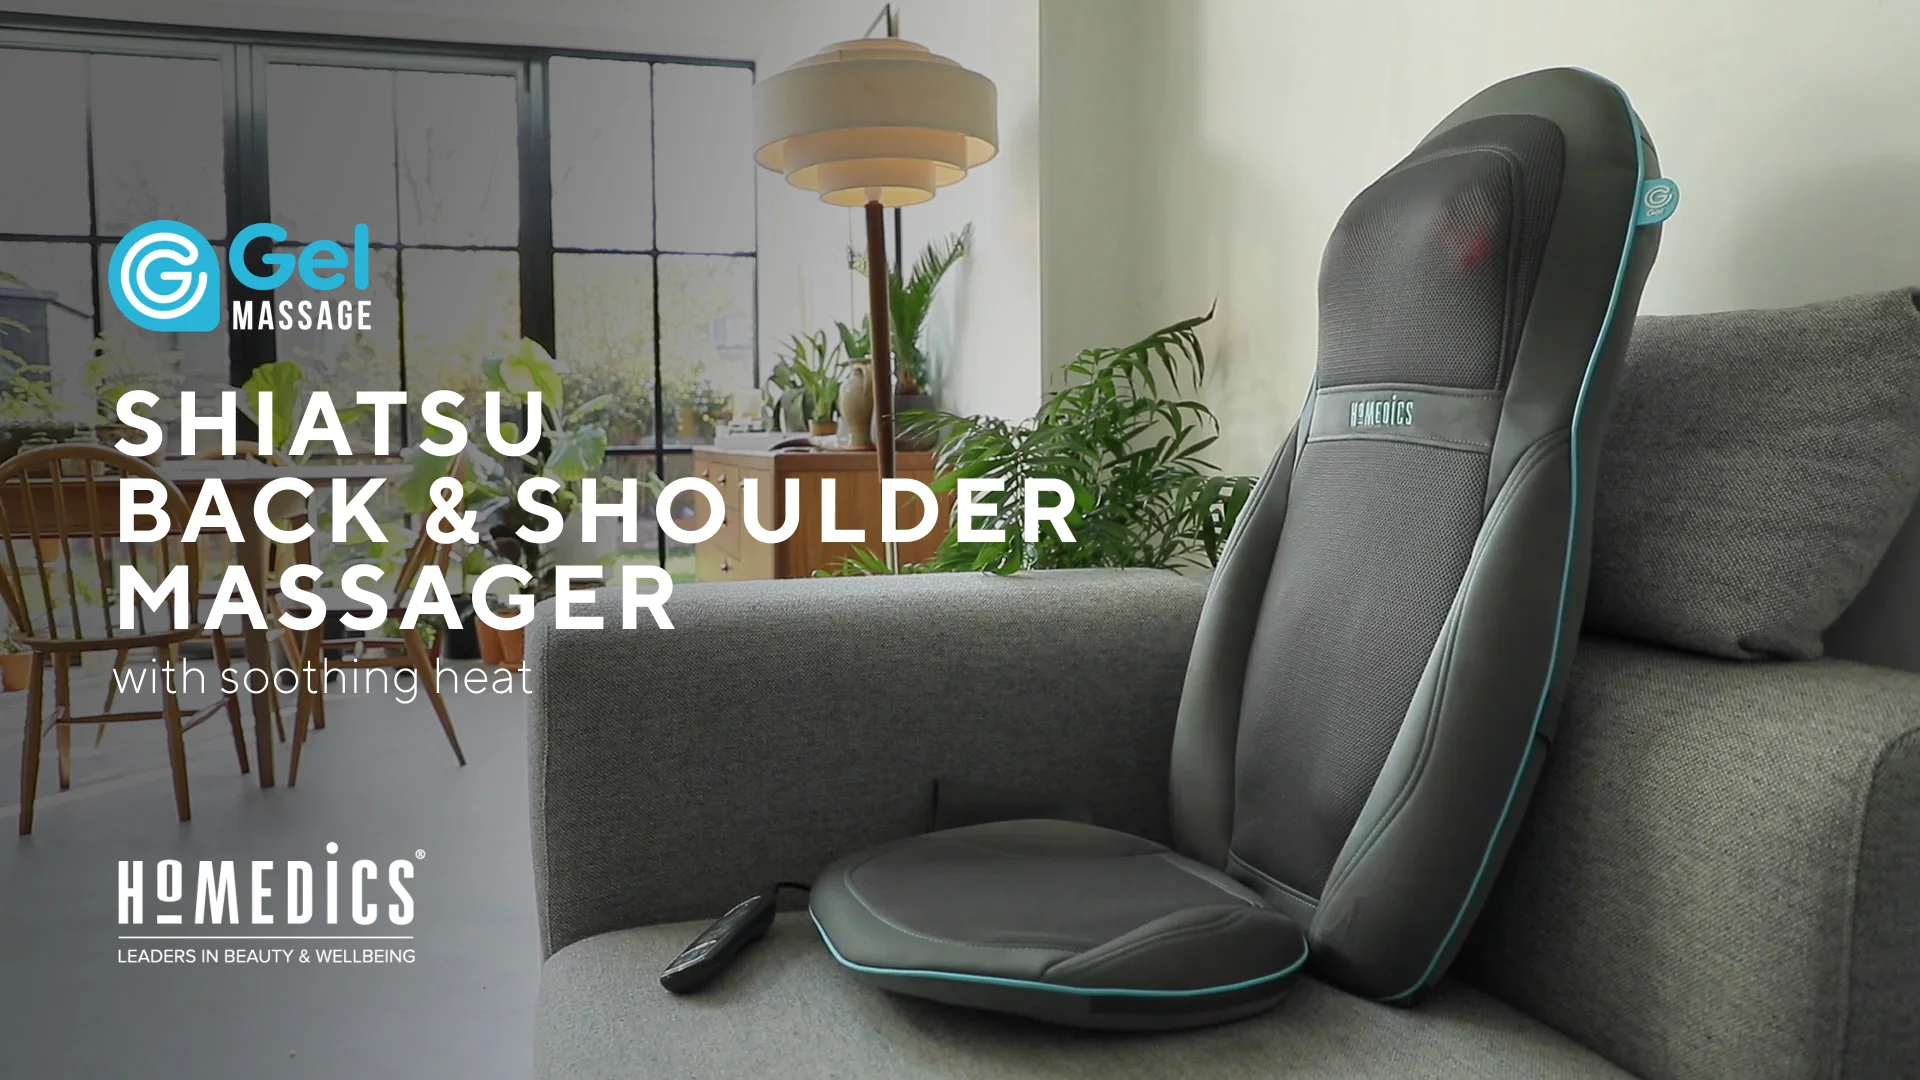 Review : HoMedics Back Massage Gel Shiatsu 2 in 1 Back and Shoulder Massage  with Technogel